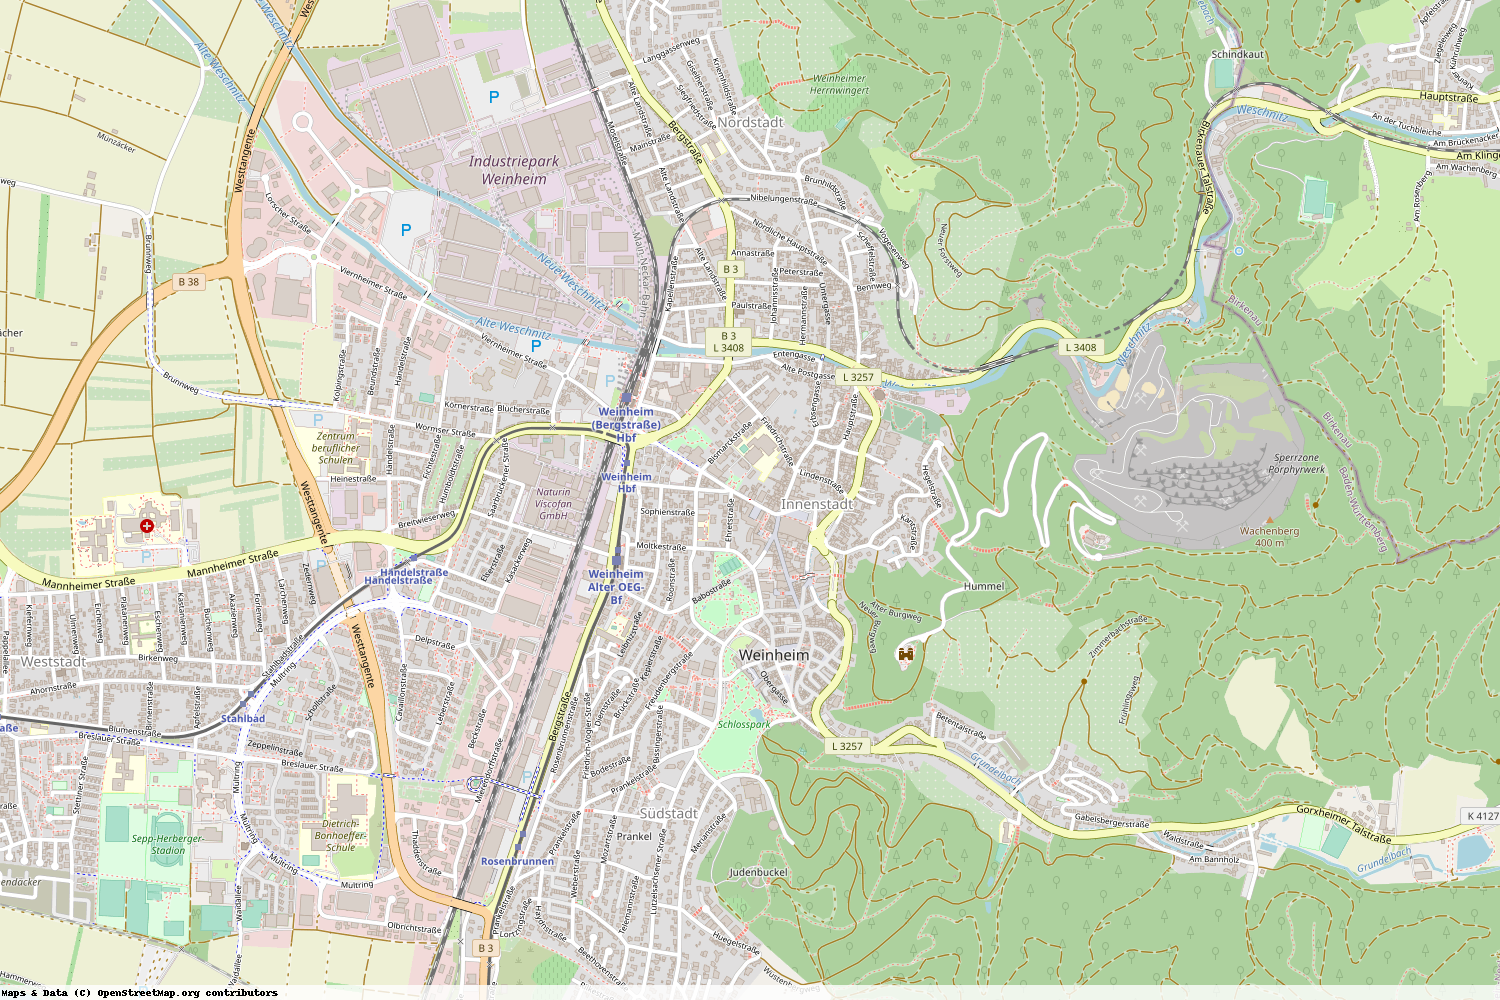 Ist gerade Stromausfall in Baden-Württemberg - Rhein-Neckar-Kreis - Weinheim?